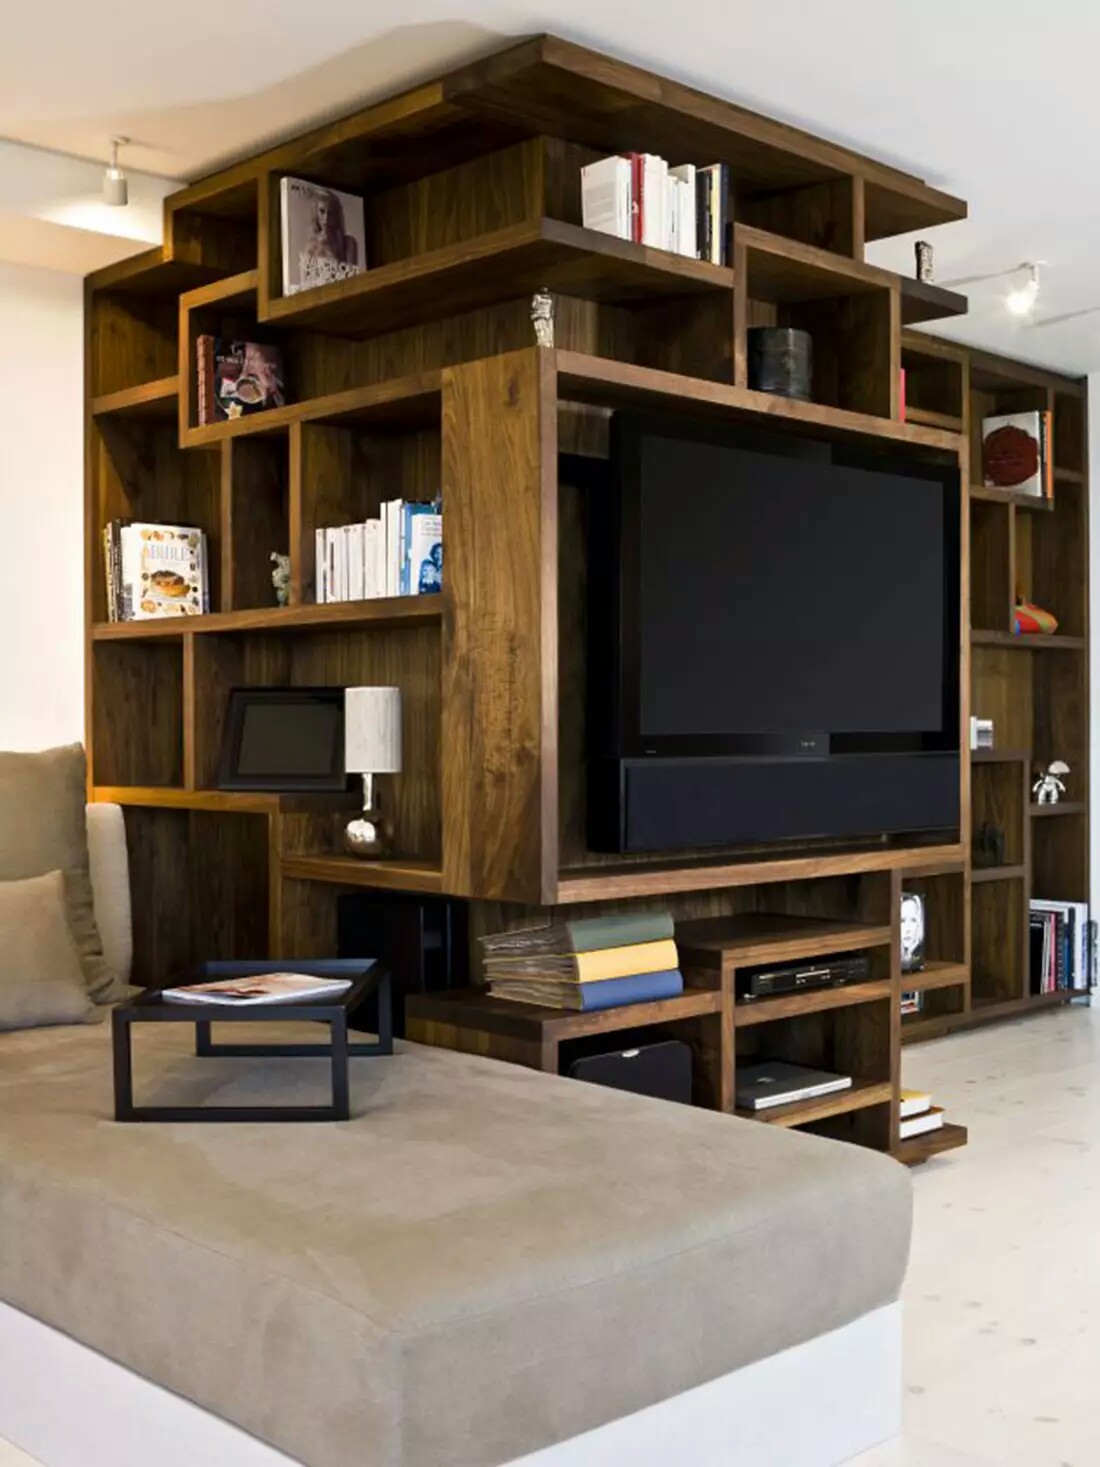 Bookshelf Wall Design Include Hanging Tv Wall Furniture Idea